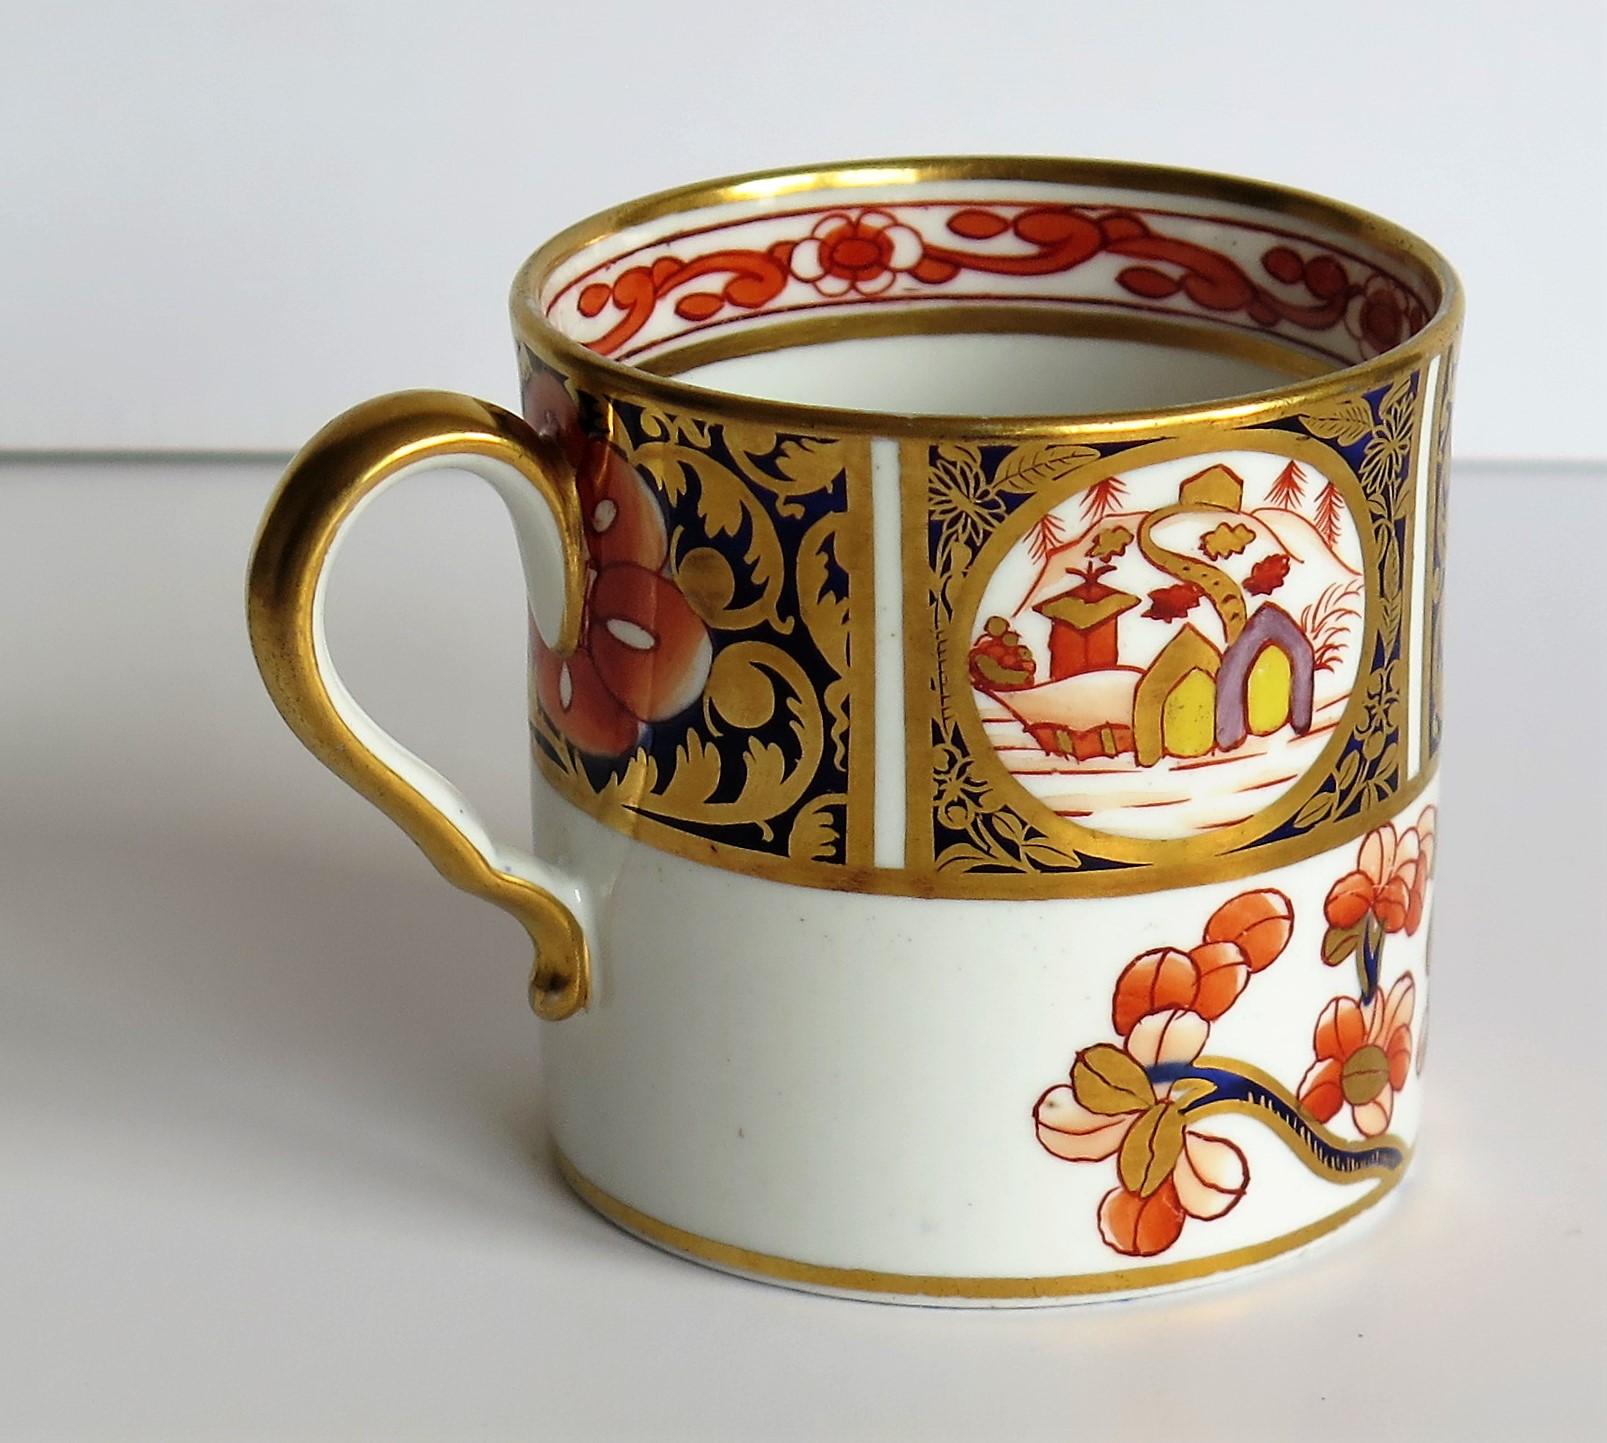 Fine George IIIrd Spode Coffee Can Richly Gilded Hand Painted Ptn. 1956, Ca 1810 (19. Jahrhundert)